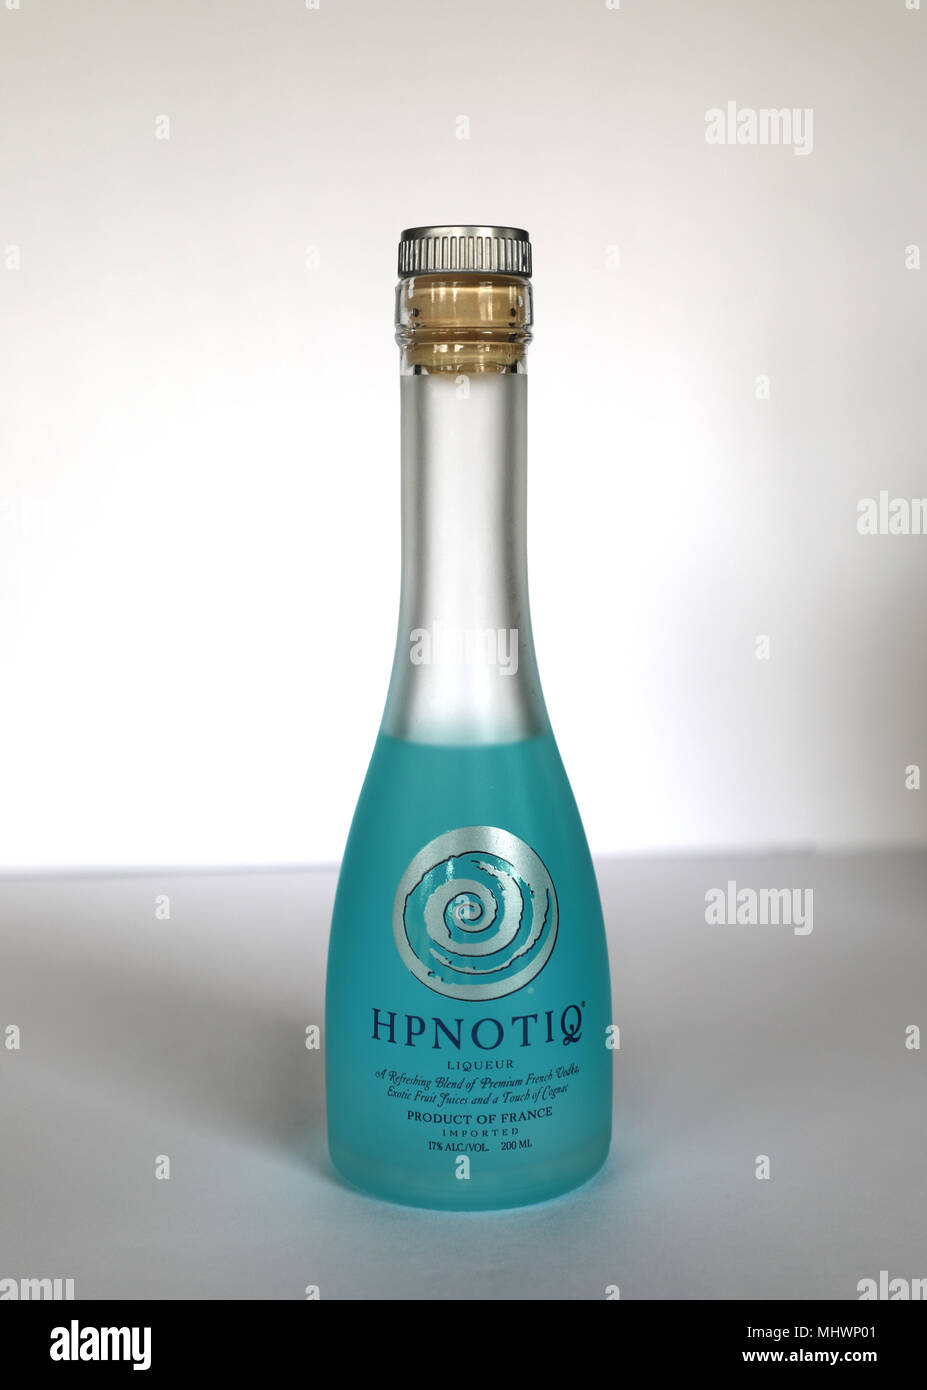 Hpnotiq Blue Liqueur Vodka Exotic Fruits and Cognac 17% Alcohol Bottle on  White Background Product Of France Stock Photo - Alamy